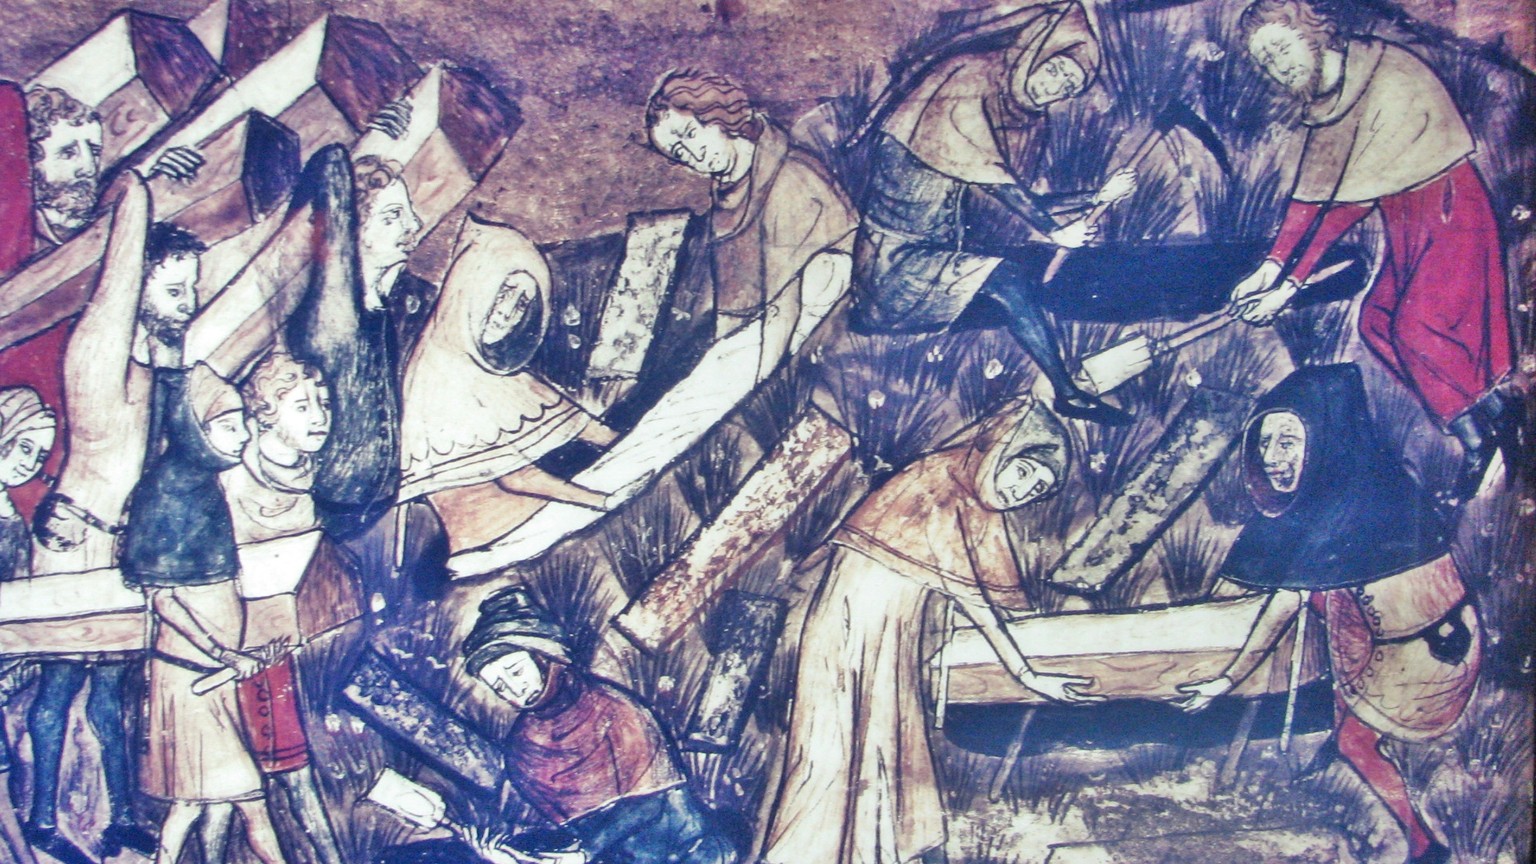 Pest, Schwarzer Tod, The citizens of Toumai bury their dead during the black death. Miniature from manuscript, Belgium, 14th century